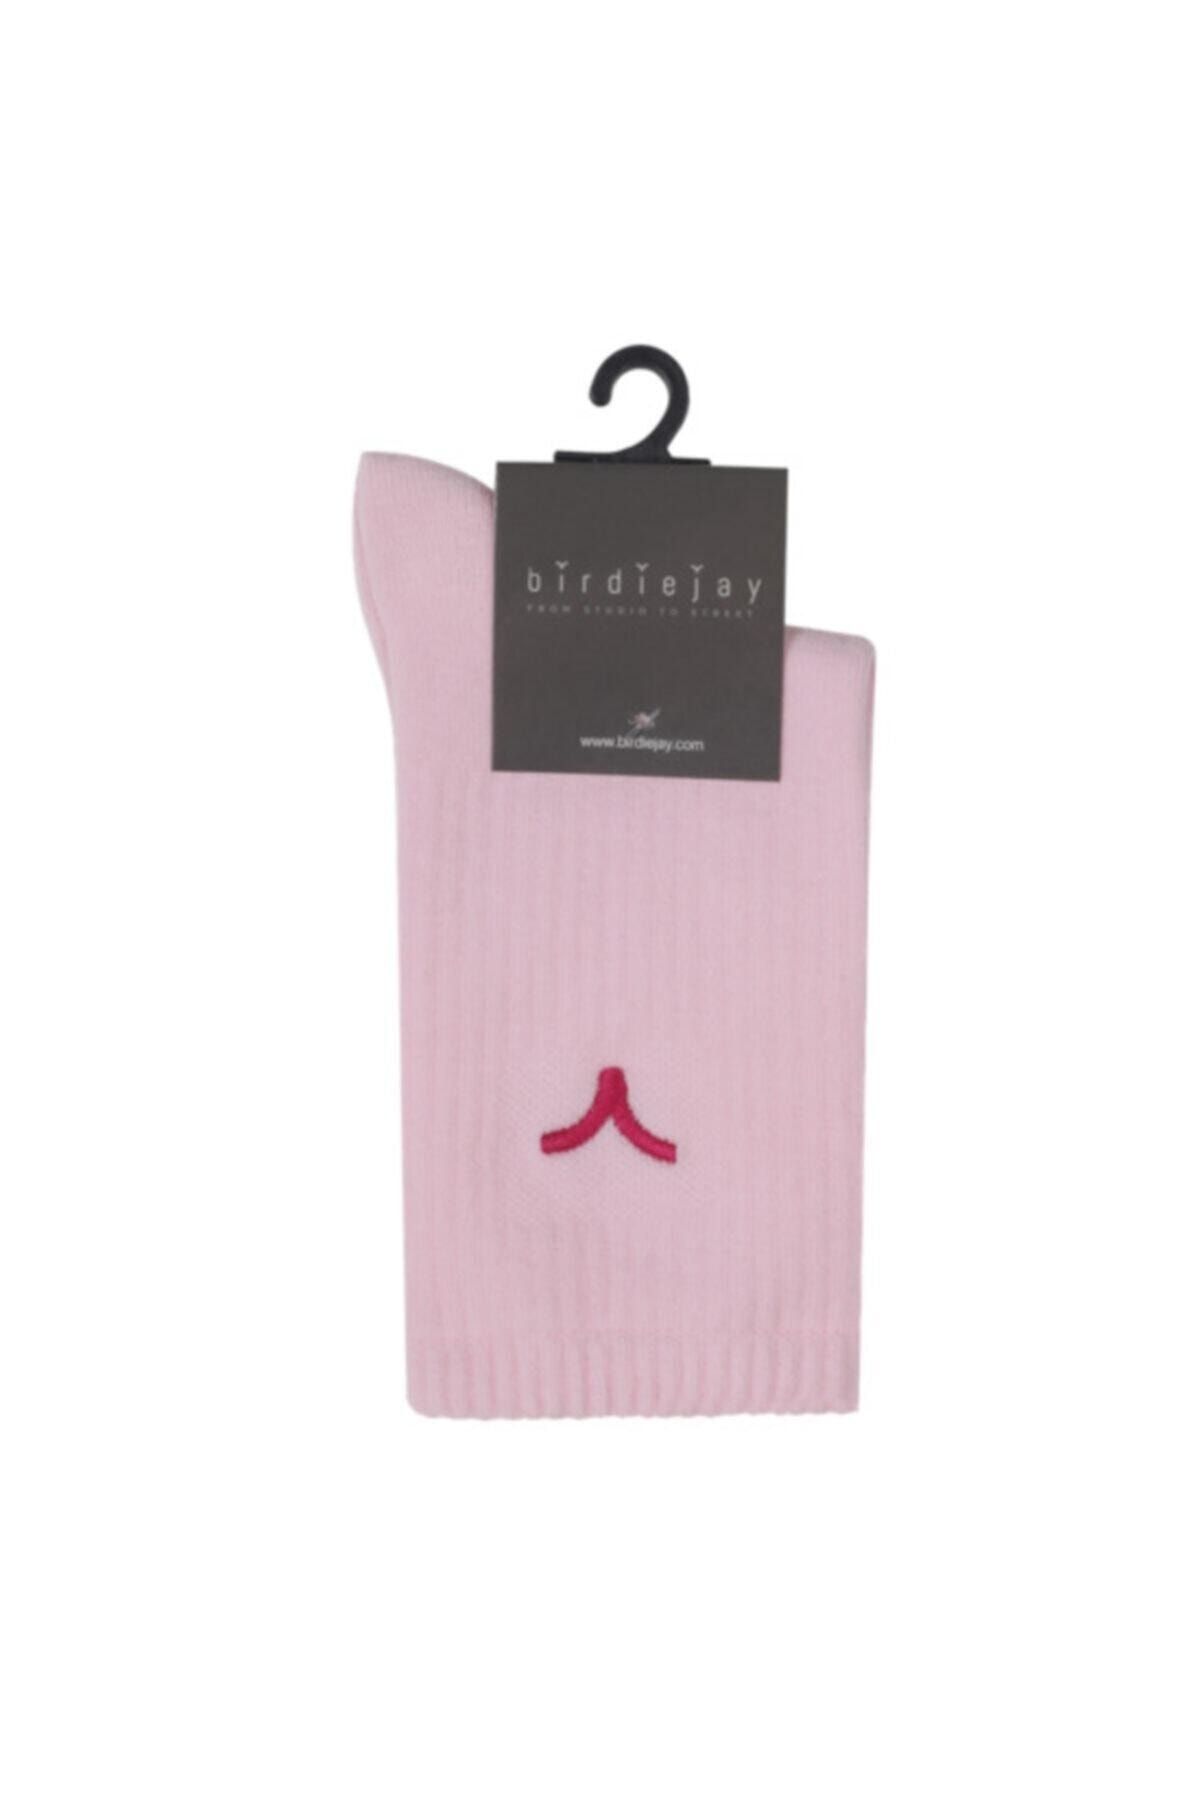 Birdiejay Essentıal Socks Çorap - Pudra Pembesı